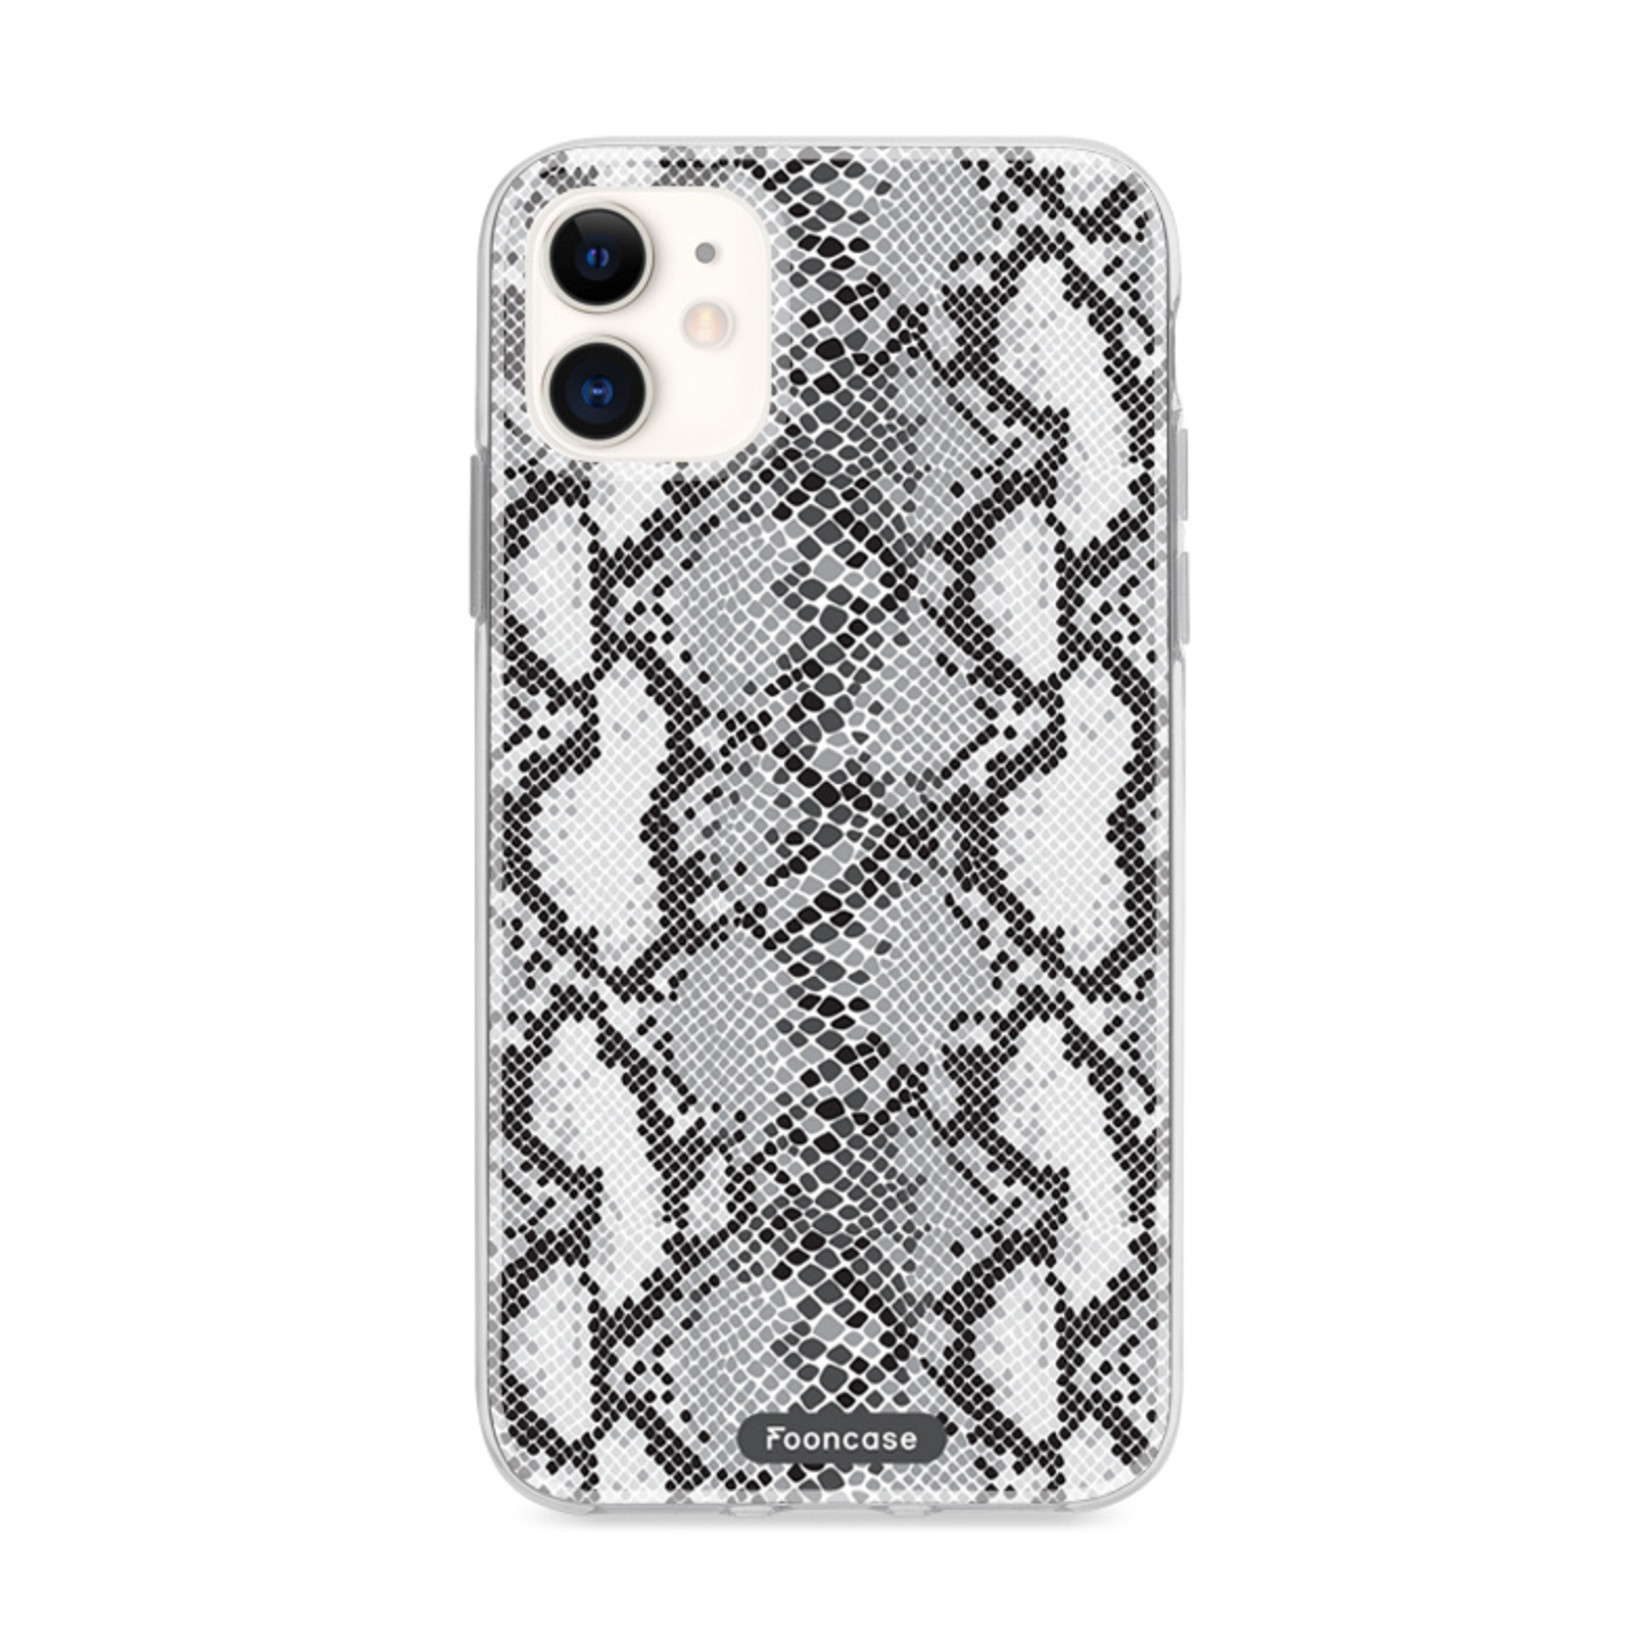 FOONCASE iPhone 11 hoesje TPU Soft Case - Back Cover - Snake it / Slangen print